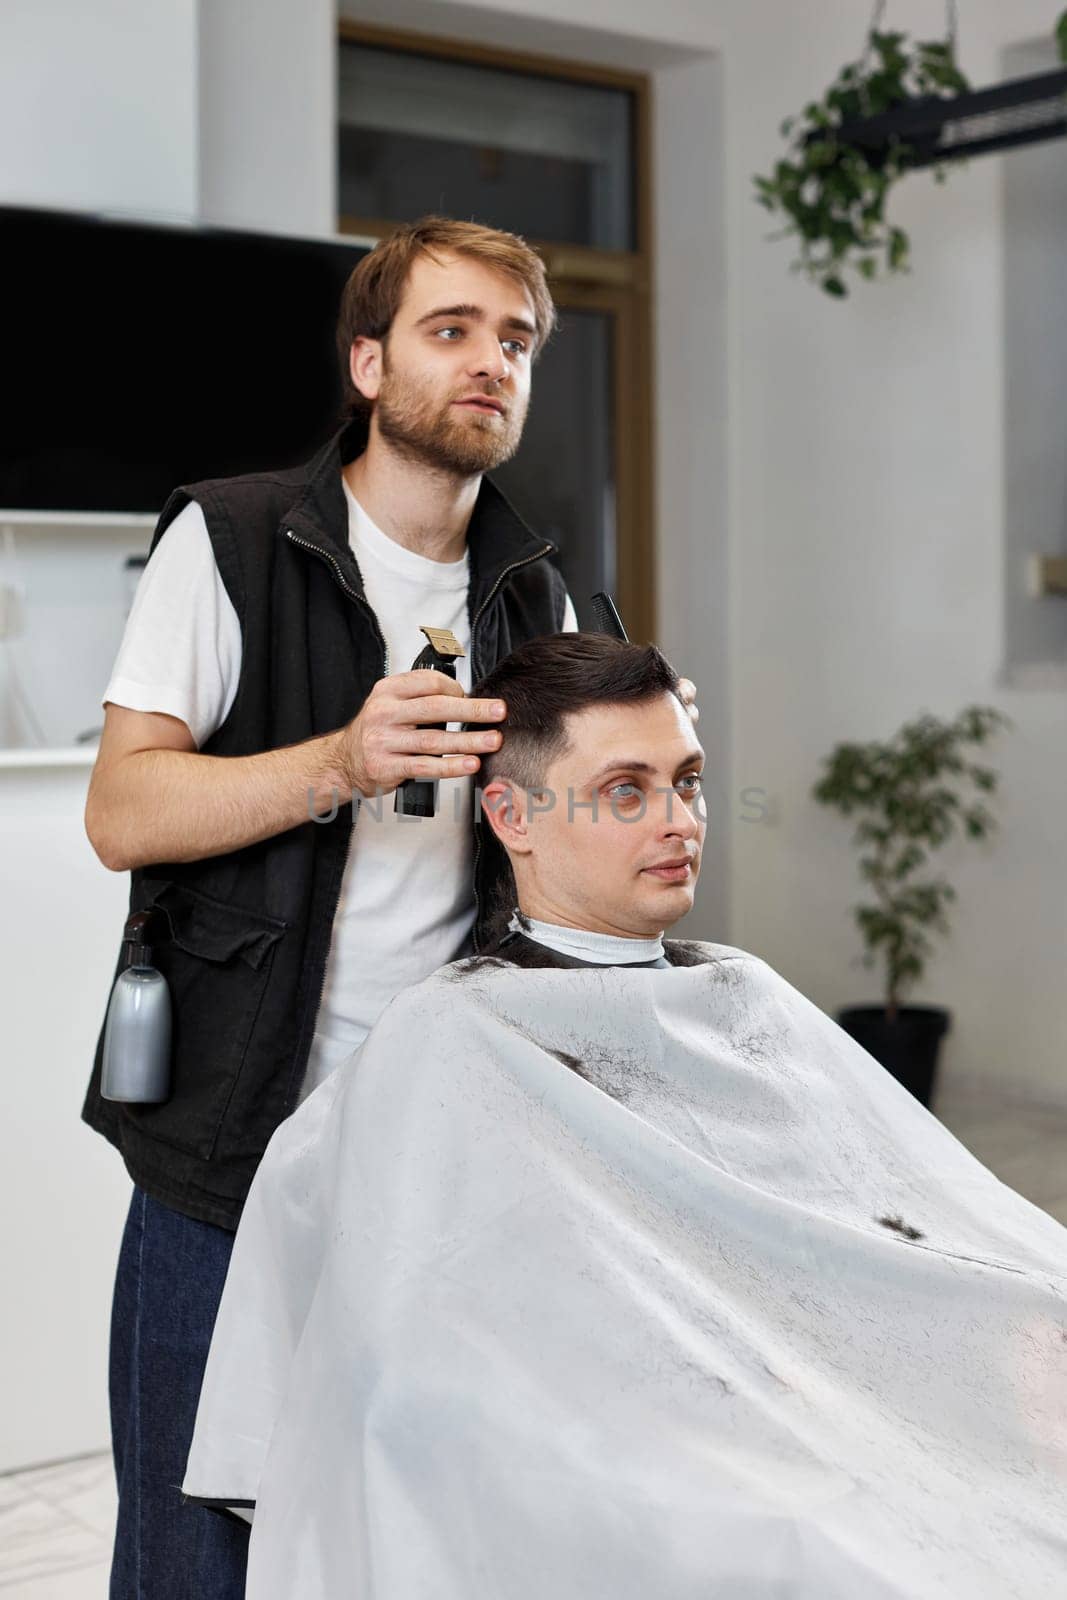 Barber shaving caucasian man in barber shop. by erstudio